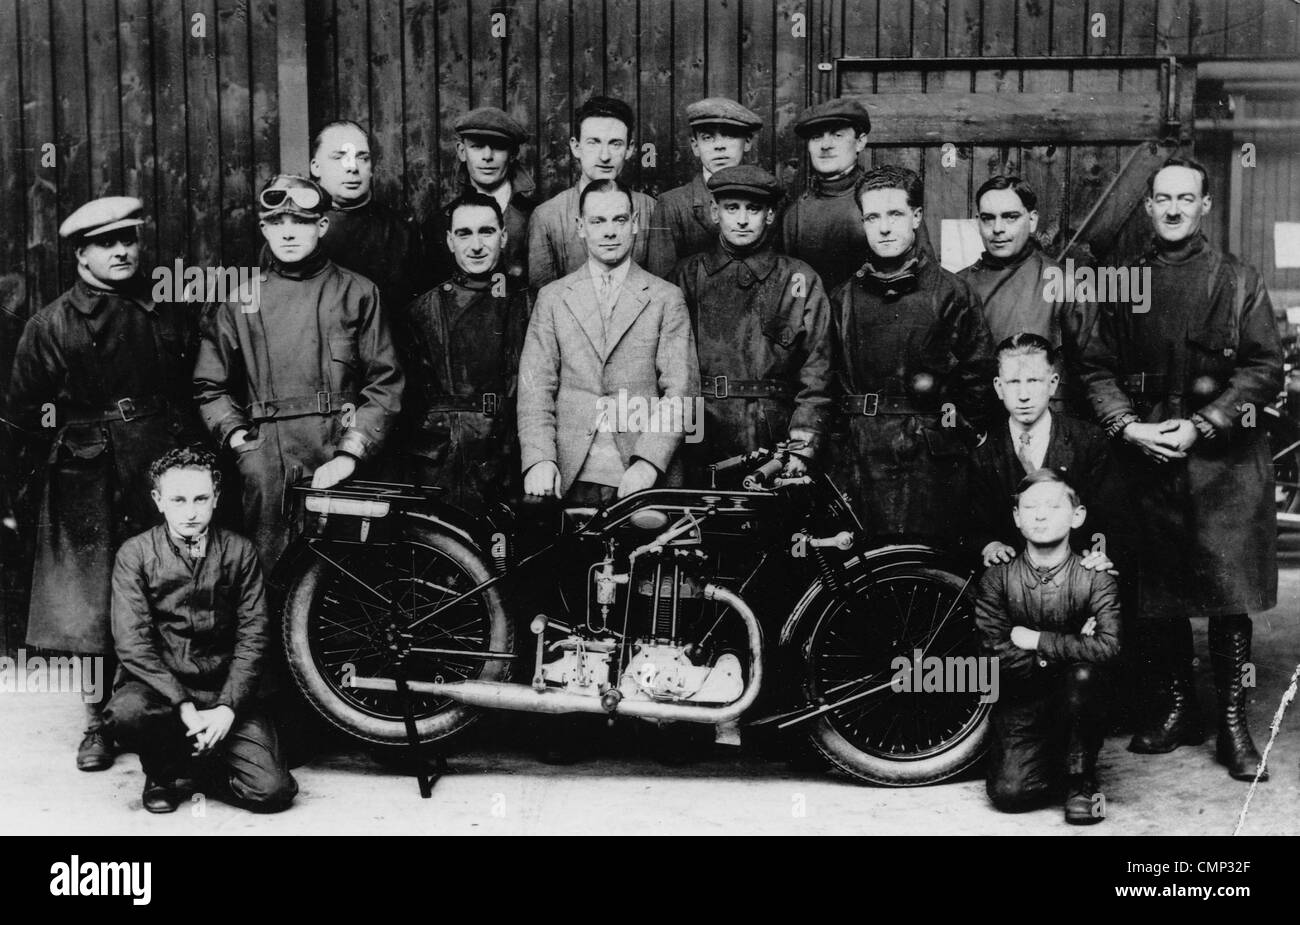 Motociclistas, A. J. Stevens & Company Ltd., Wolverhampton, comienzos del 20%. A. J. Stevens (AJS) motociclistas con un Foto de stock